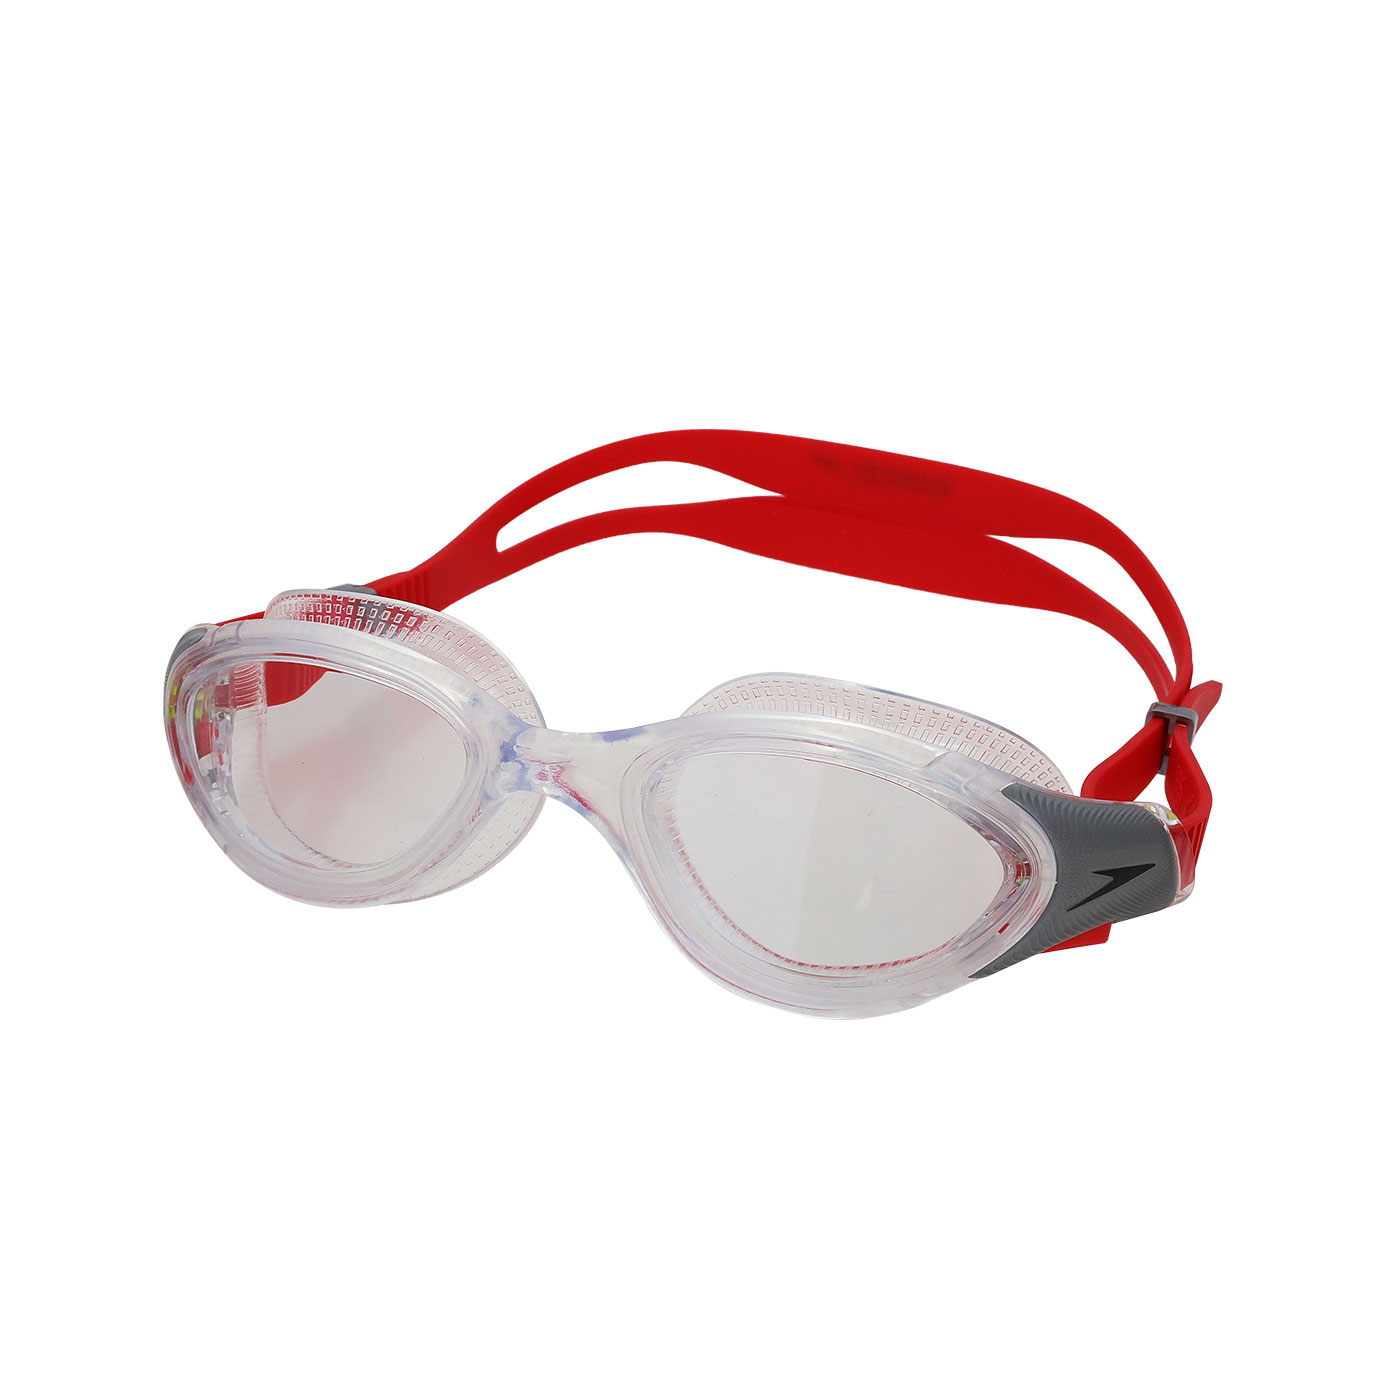 SPEEDO 成人運動泳鏡Biofuse2.0  SD800233214515 - 透明灰